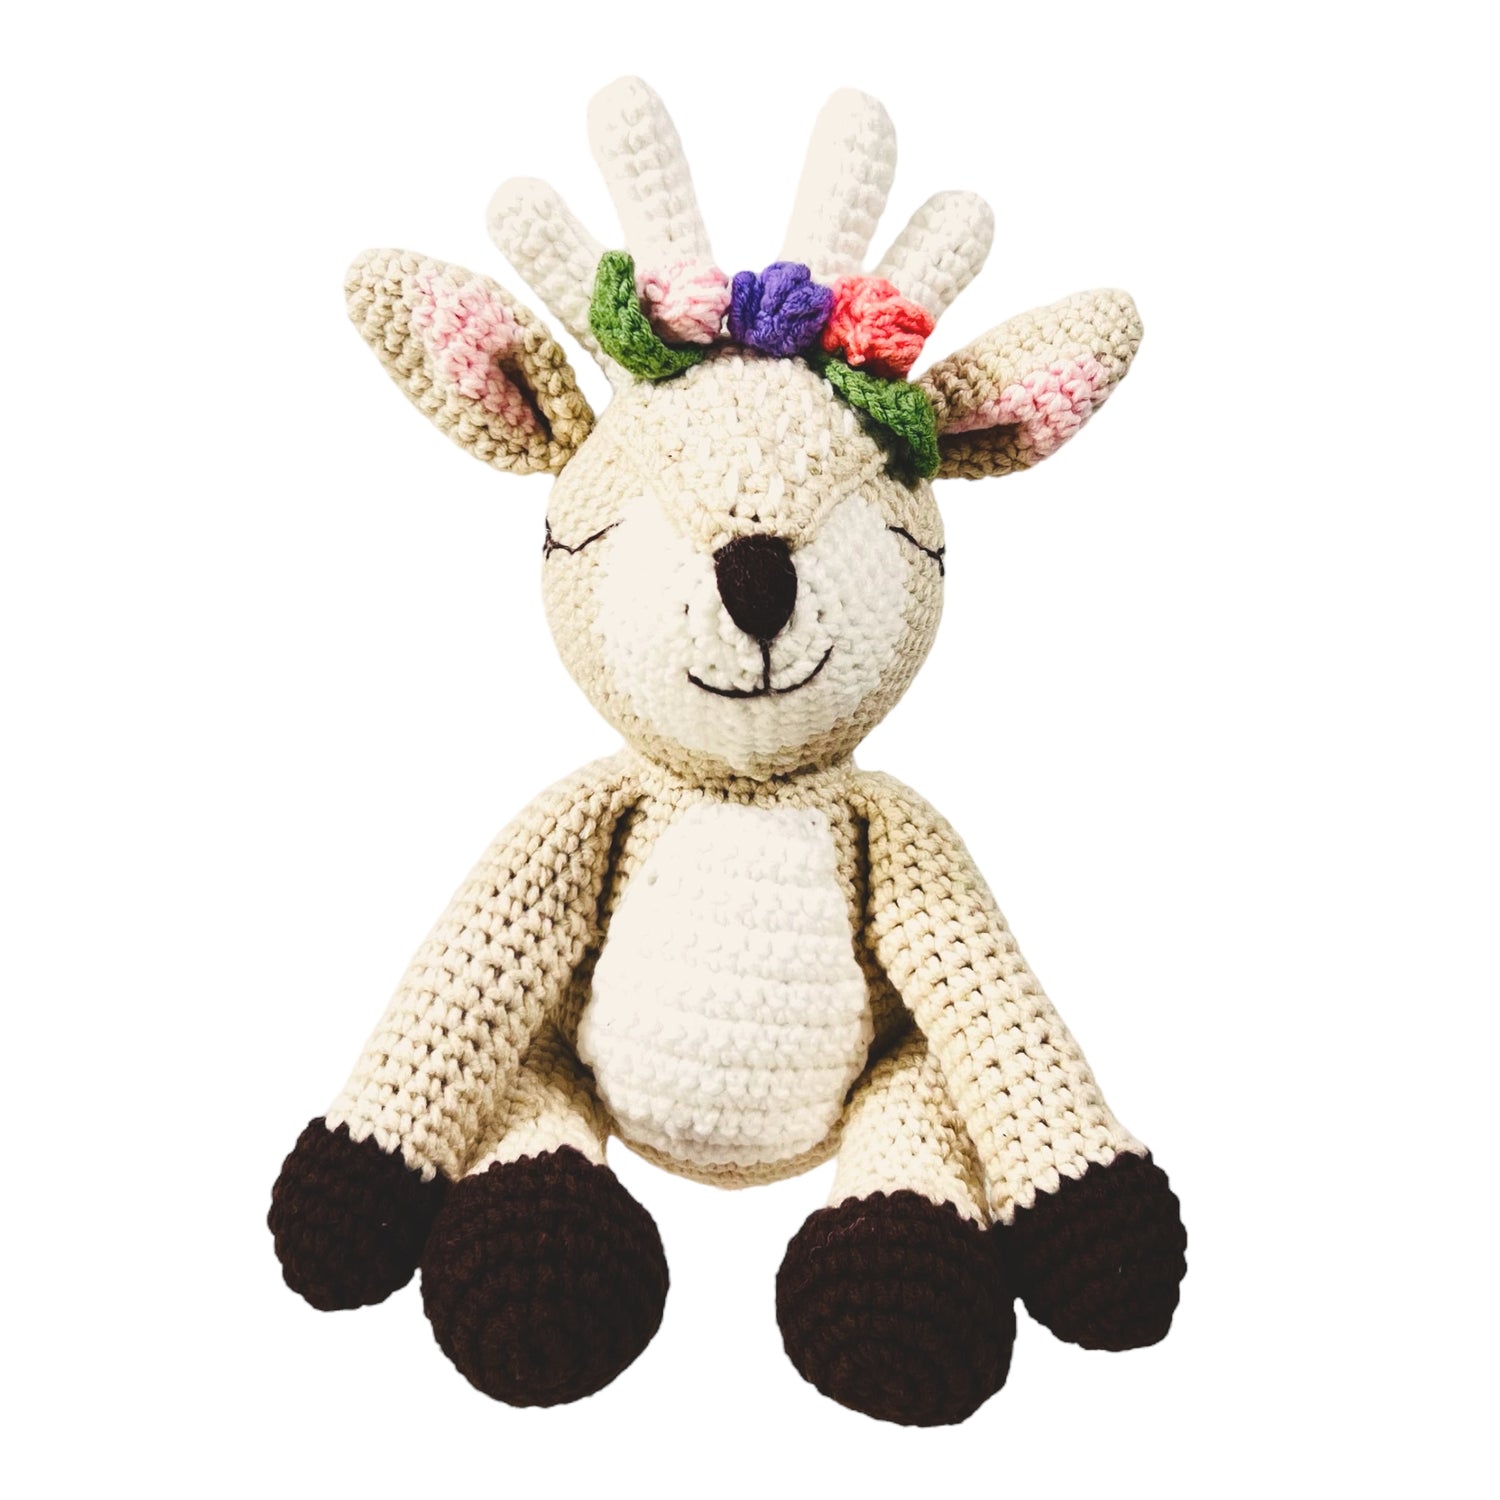 Crocheted Animal Doll - Penelope, the Reindeer